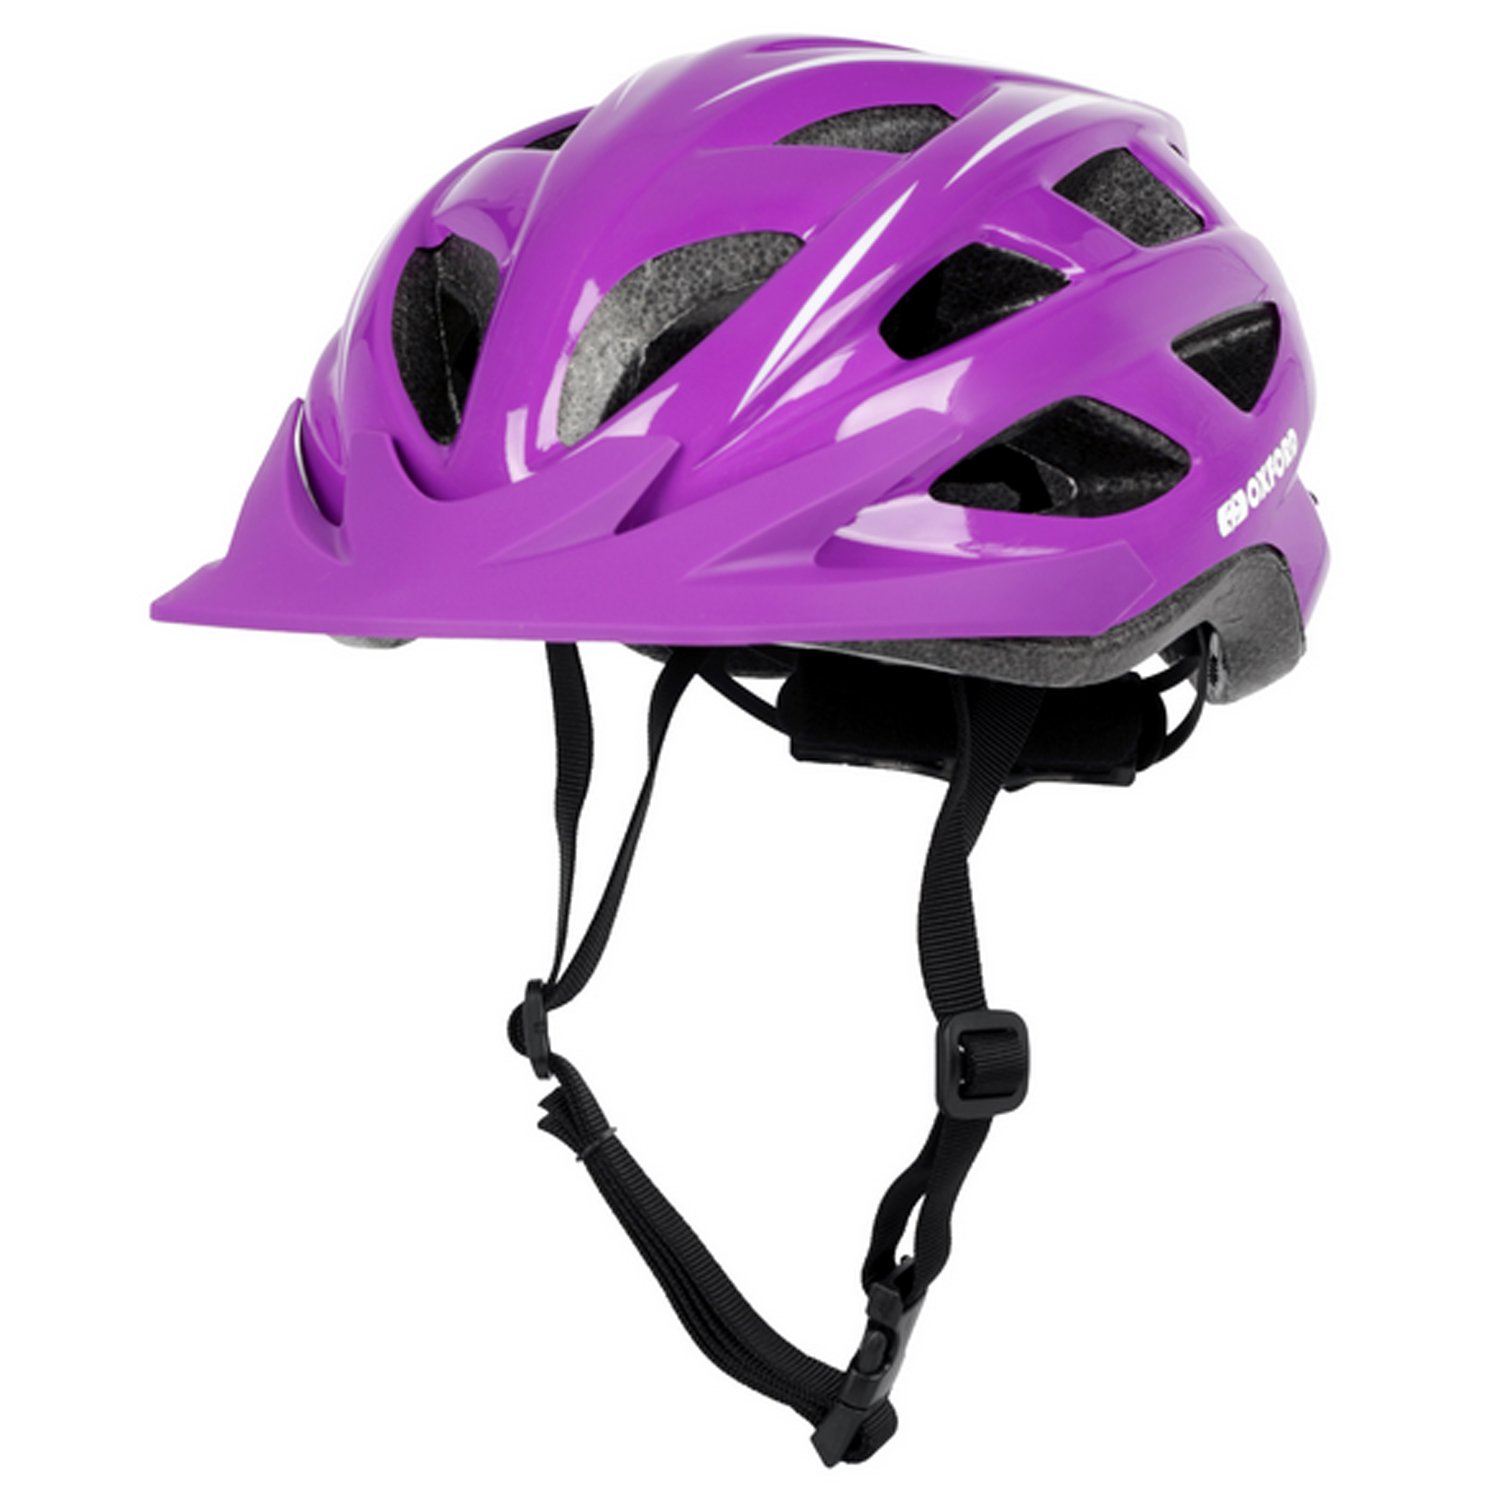 Велошлем Oxford Talon Helmet Purple, унисекс, фиолетовый, 2023, T1812 женский велосипед stels miss 5000 md v020 год 2023 фиолетовый розовый ростовка 18